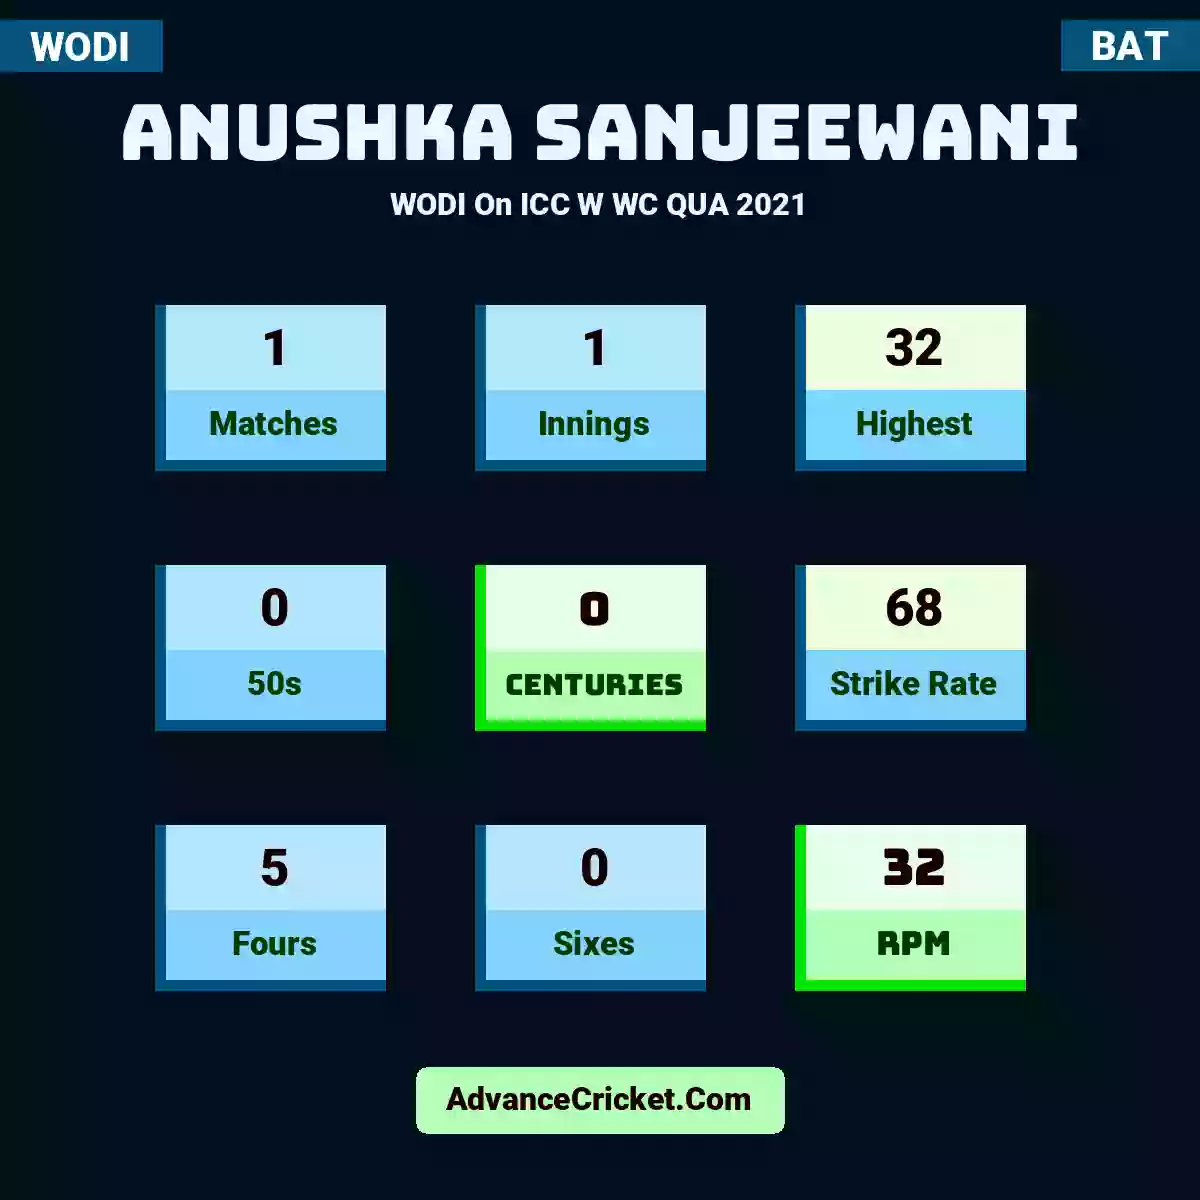 Anushka Sanjeewani WODI  On ICC W WC QUA 2021, Anushka Sanjeewani played 1 matches, scored 32 runs as highest, 0 half-centuries, and 0 centuries, with a strike rate of 68. A.Sanjeewani hit 5 fours and 0 sixes, with an RPM of 32.